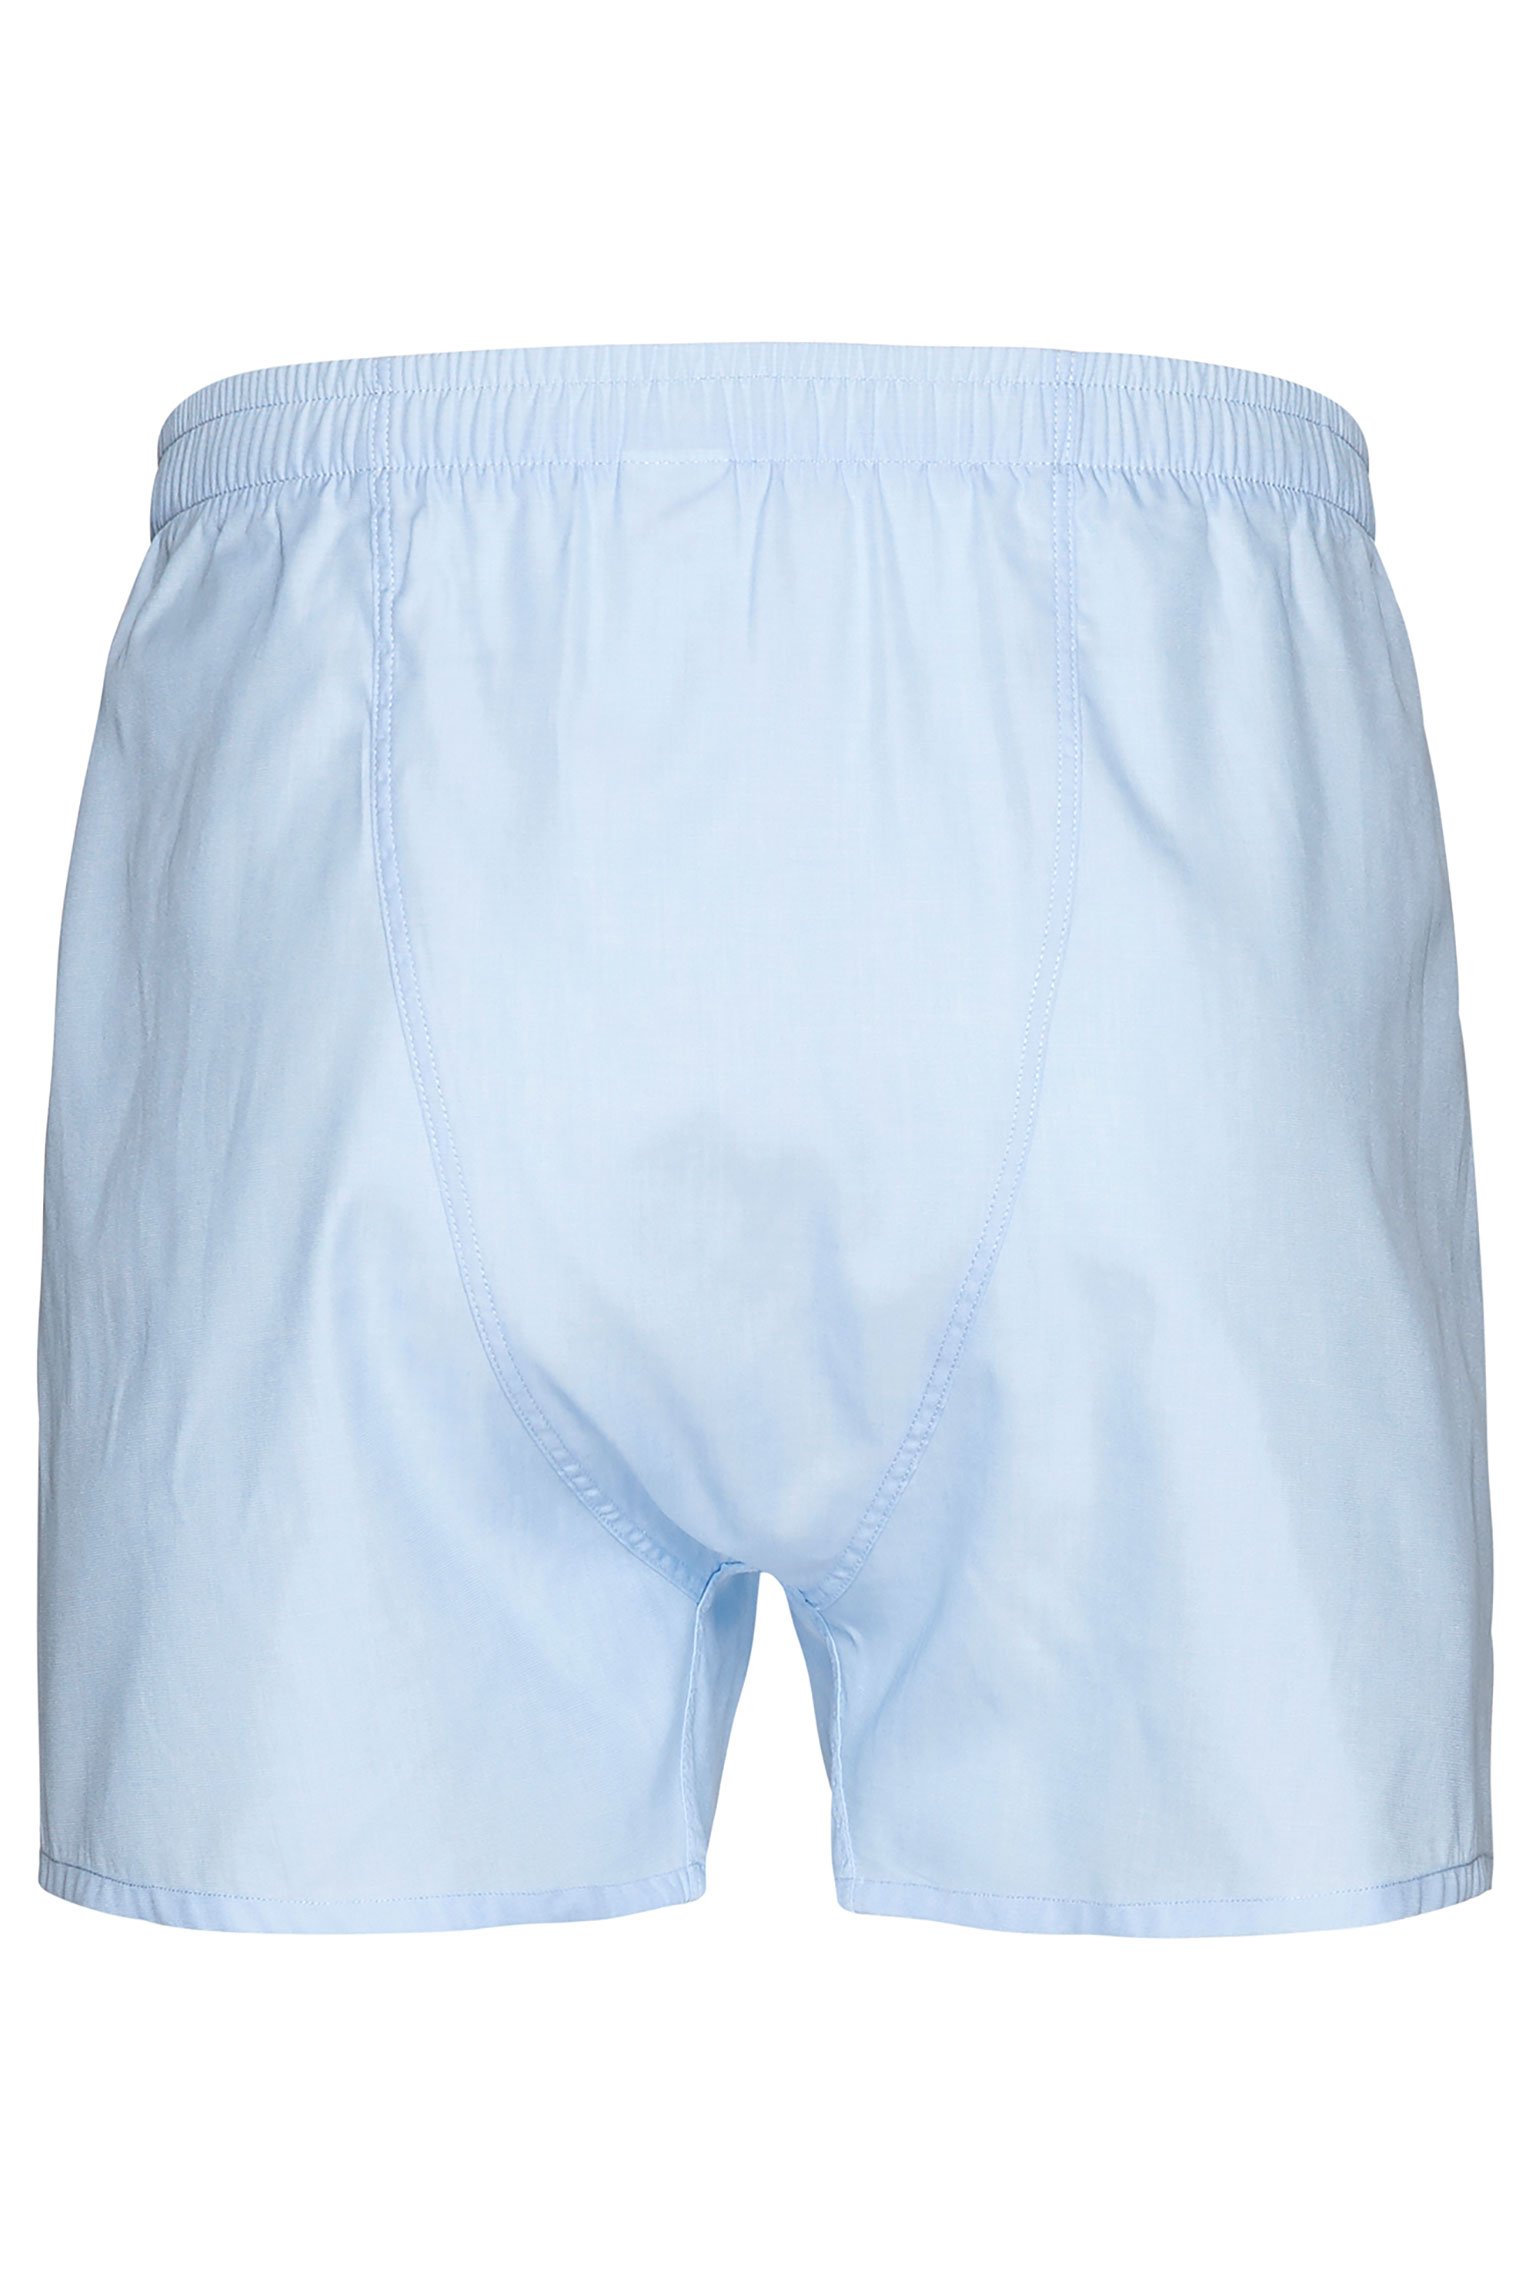 Underwear+Fil-a-Fil Boxer Shorts+91.1100.V4.140766.720.46